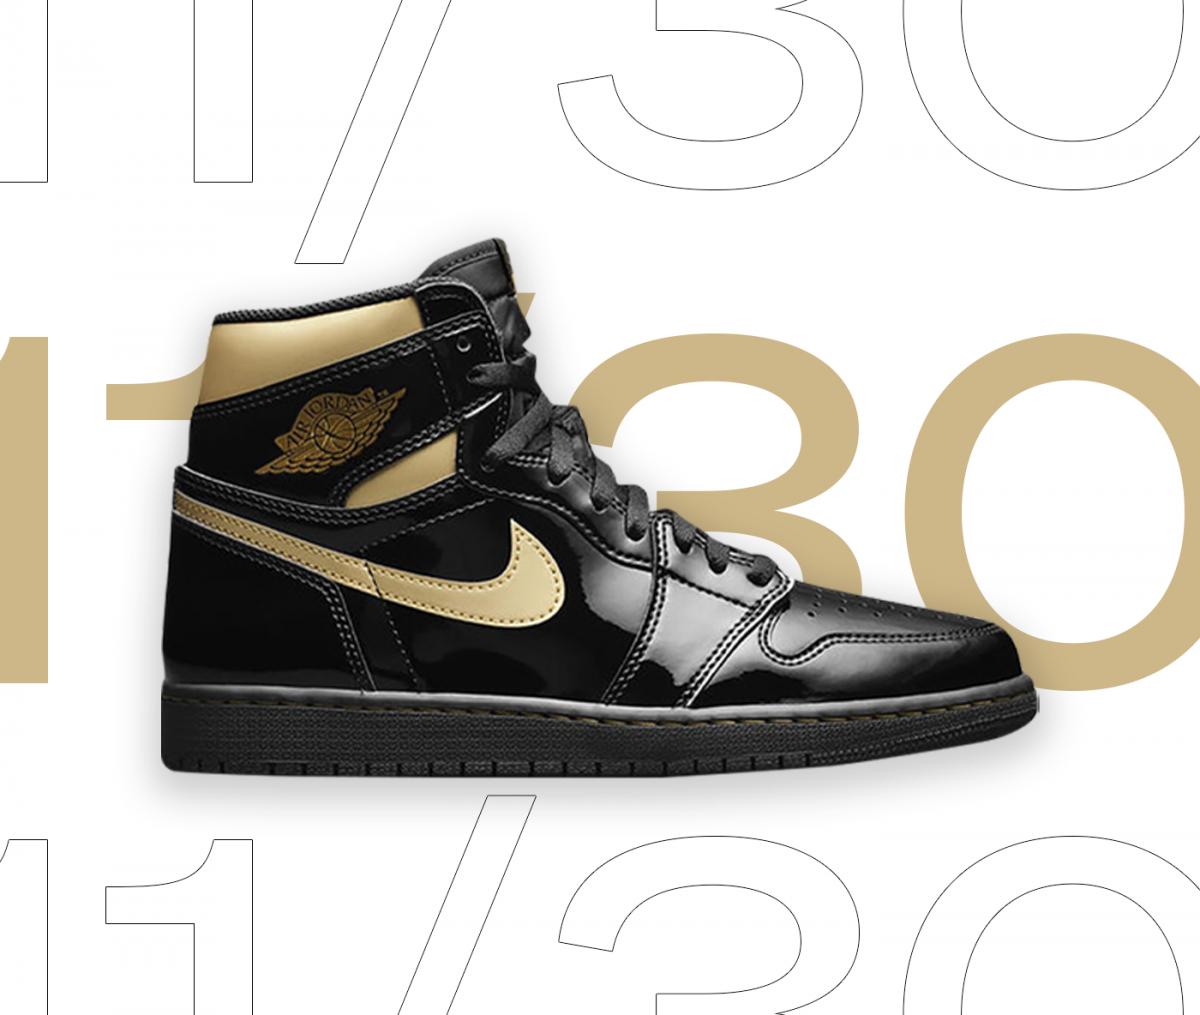 Air Jordan 13 University Gold Release Date - Sneaker Bar Detroit